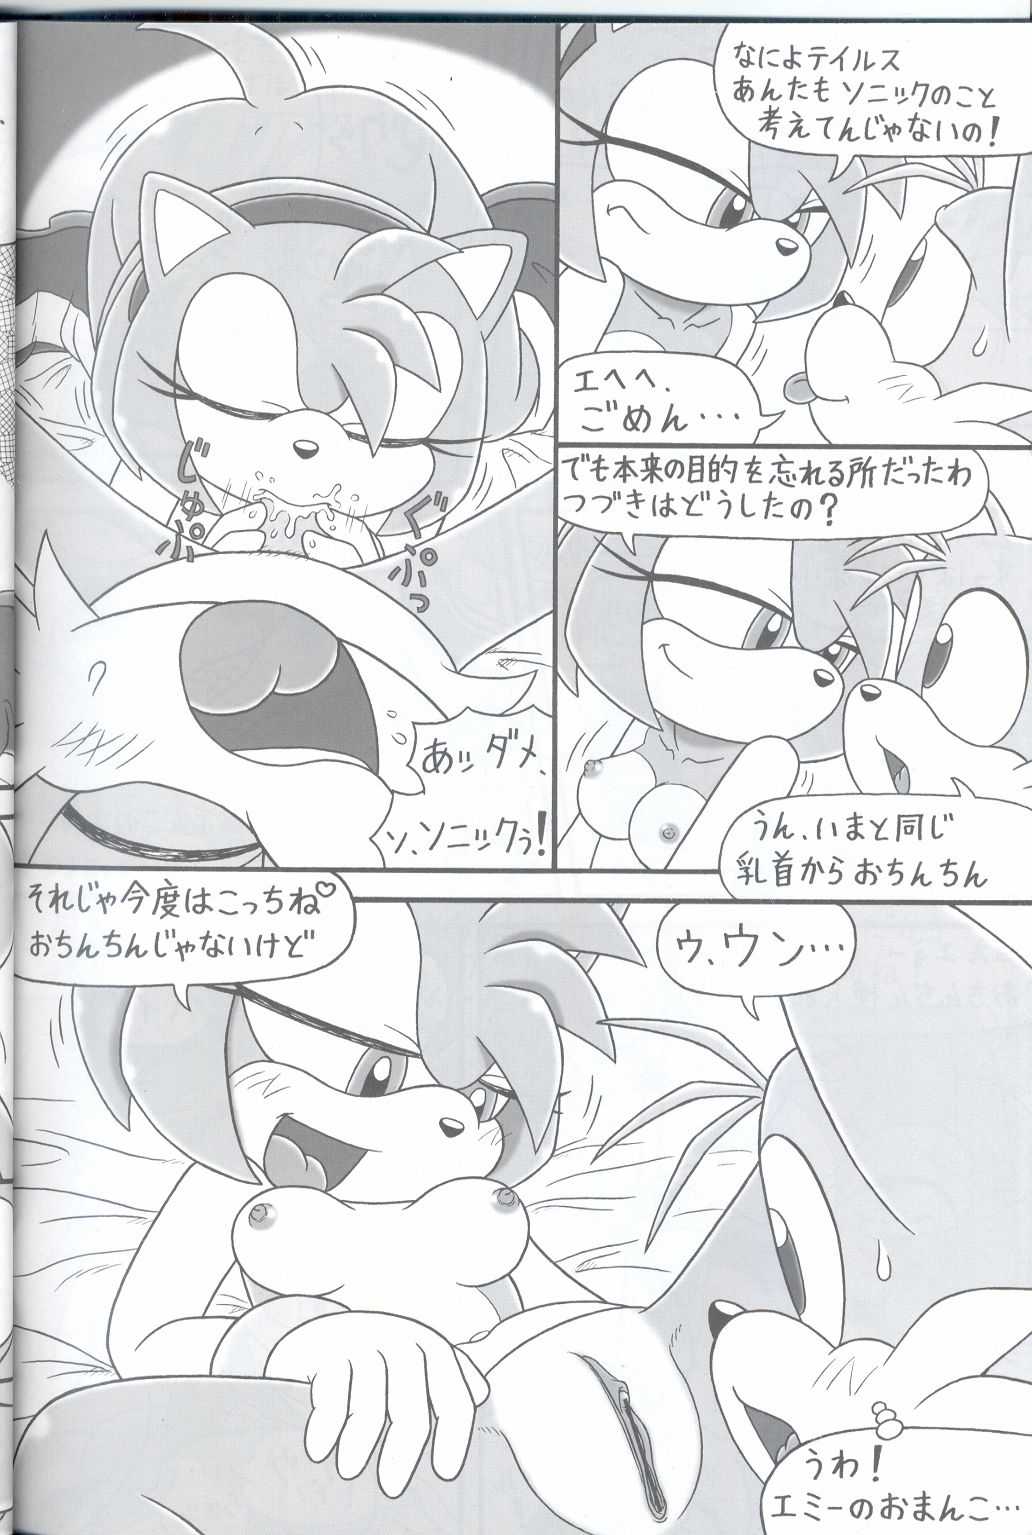 [Furry Bomb Factory] Furry BOMB 3 {Sonic} 